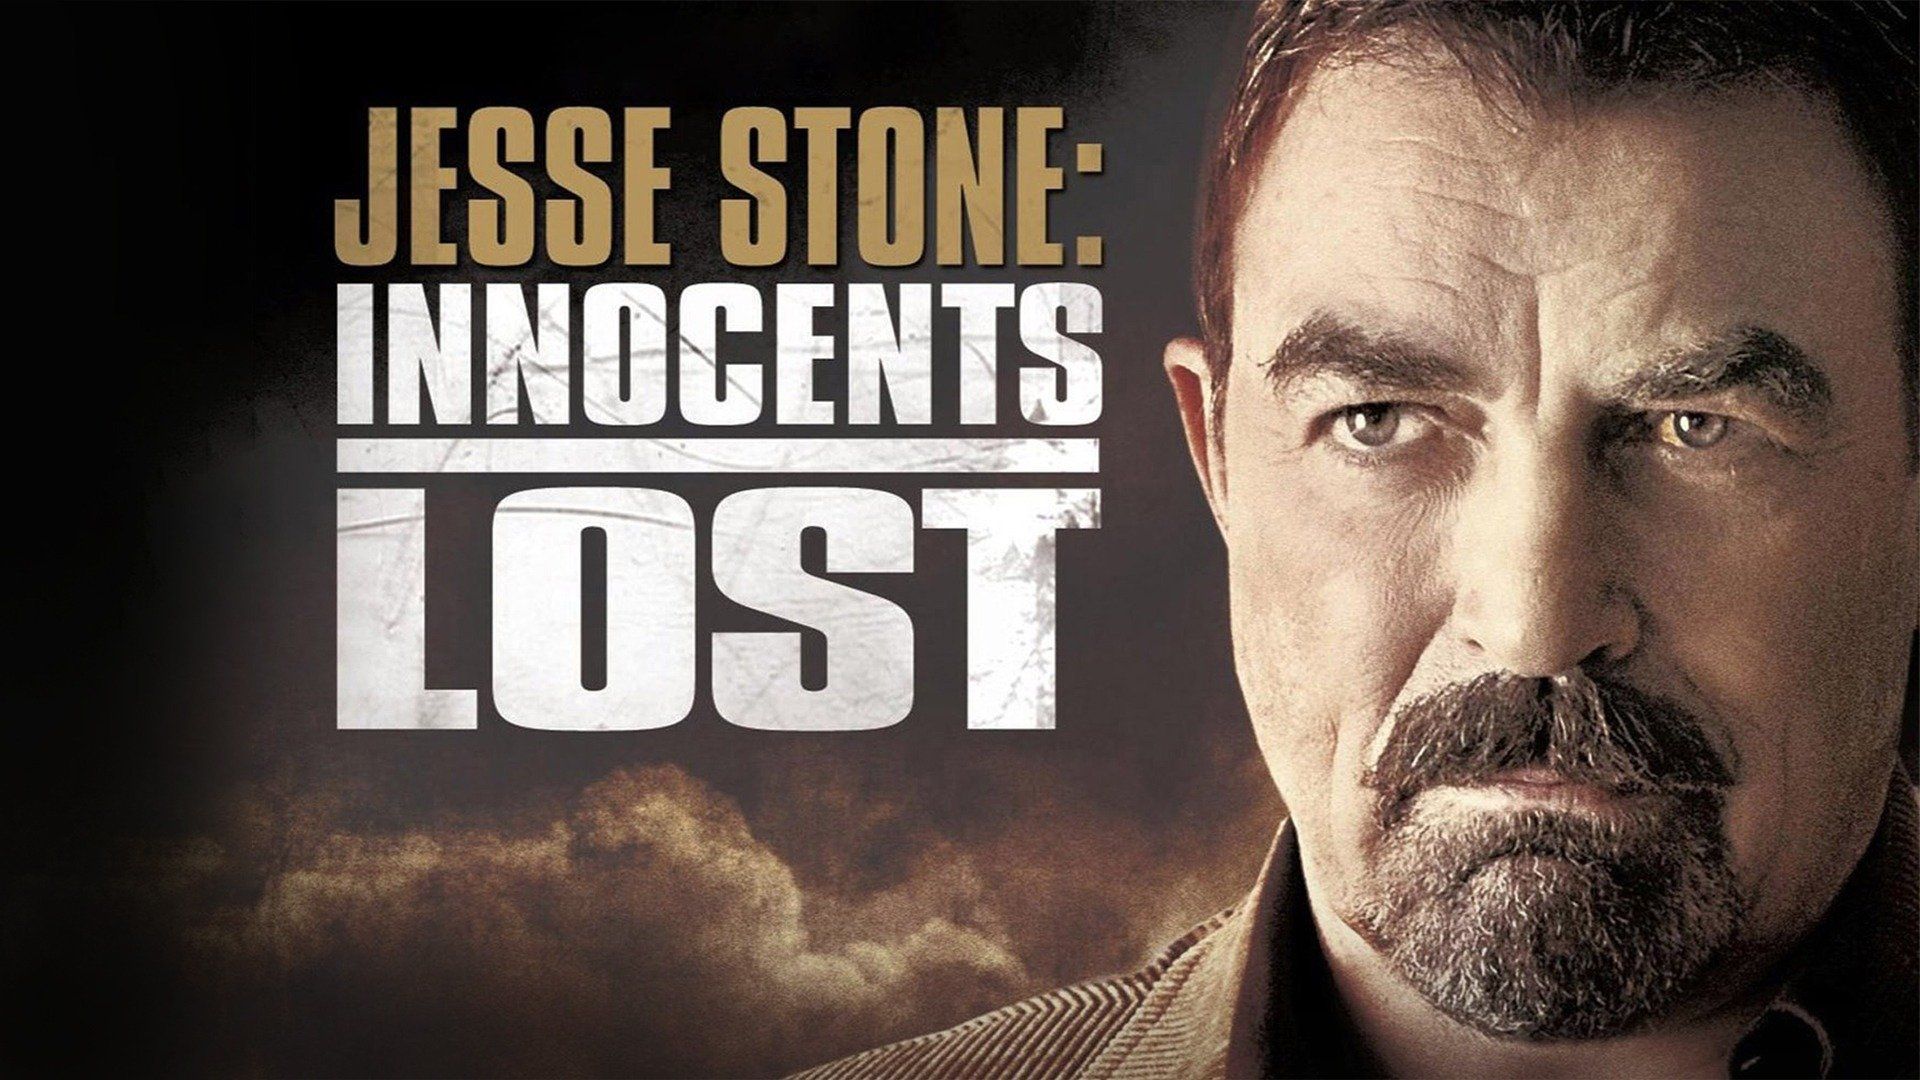 Watch Jesse Stone: Innocents Lost (2011) Full Movie Online - Plex